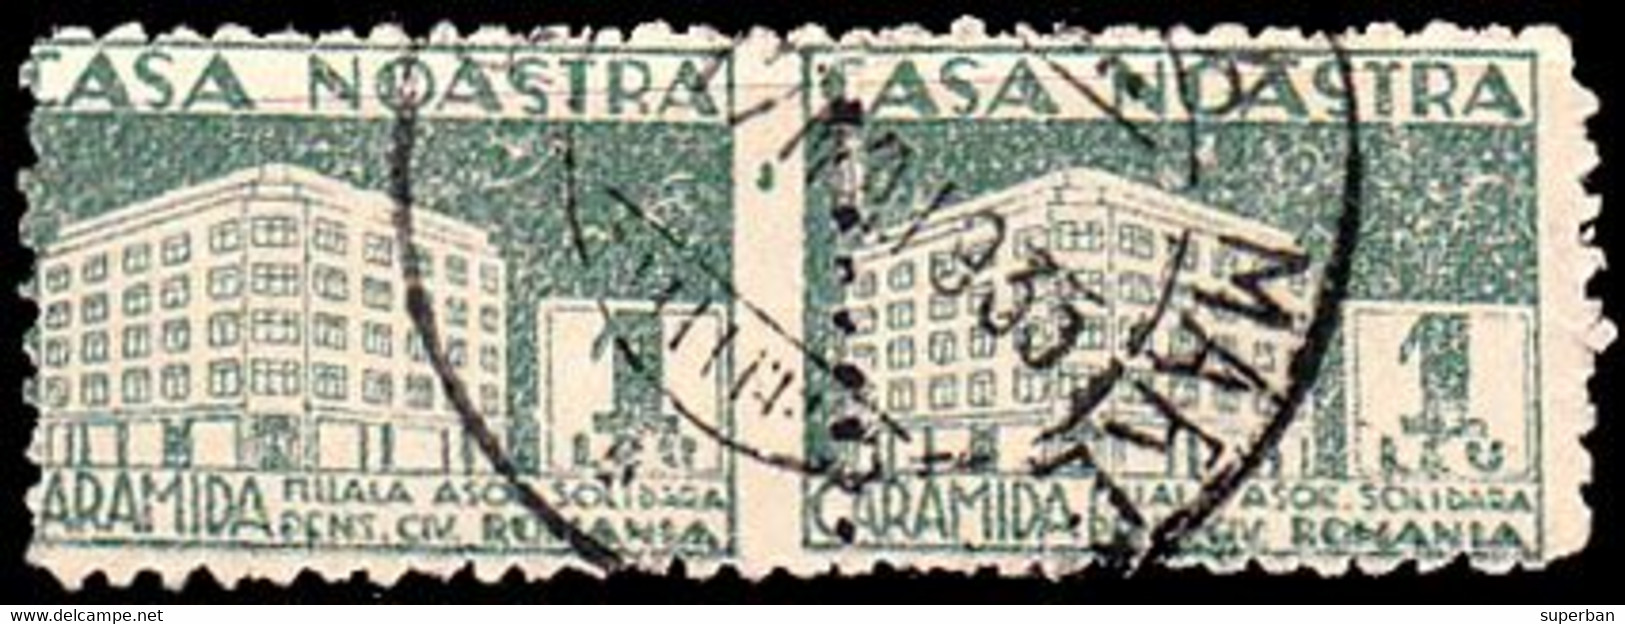 ROUMANIE / ROMANIA - CINDERELLA / TIMBRU CARAMIDA : 1 LEU - CASA NOASTRA - FUND RAISING For RETIRED ~ 1930 - '35 (ai033) - Steuermarken